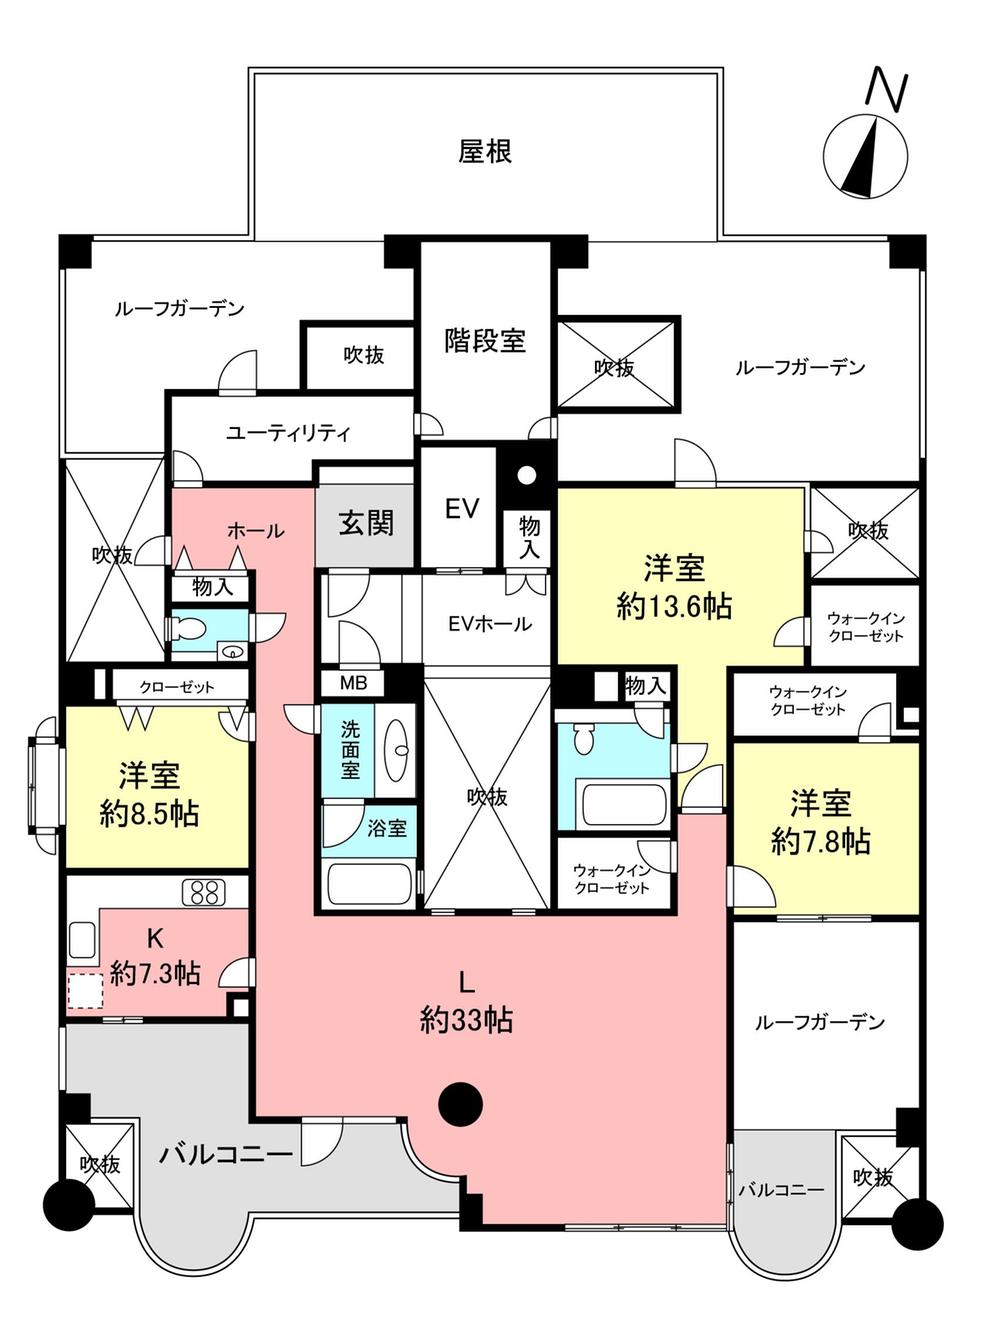 Floor plan. 3LDK + S (storeroom), Price 118 million yen, Footprint 183.76 sq m , Balcony area 18.61 sq m